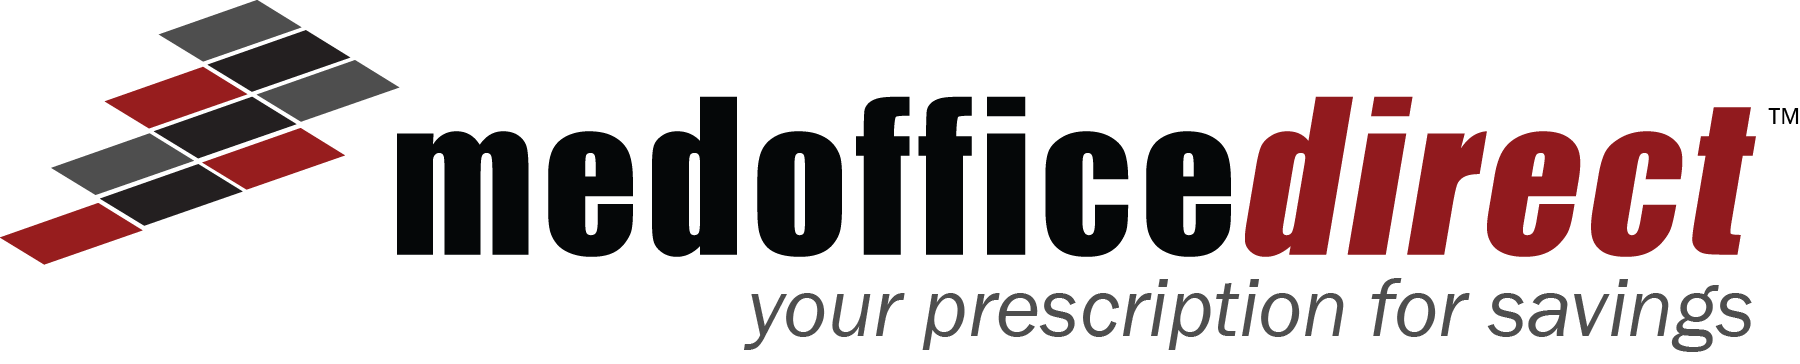 medofficedirect logo